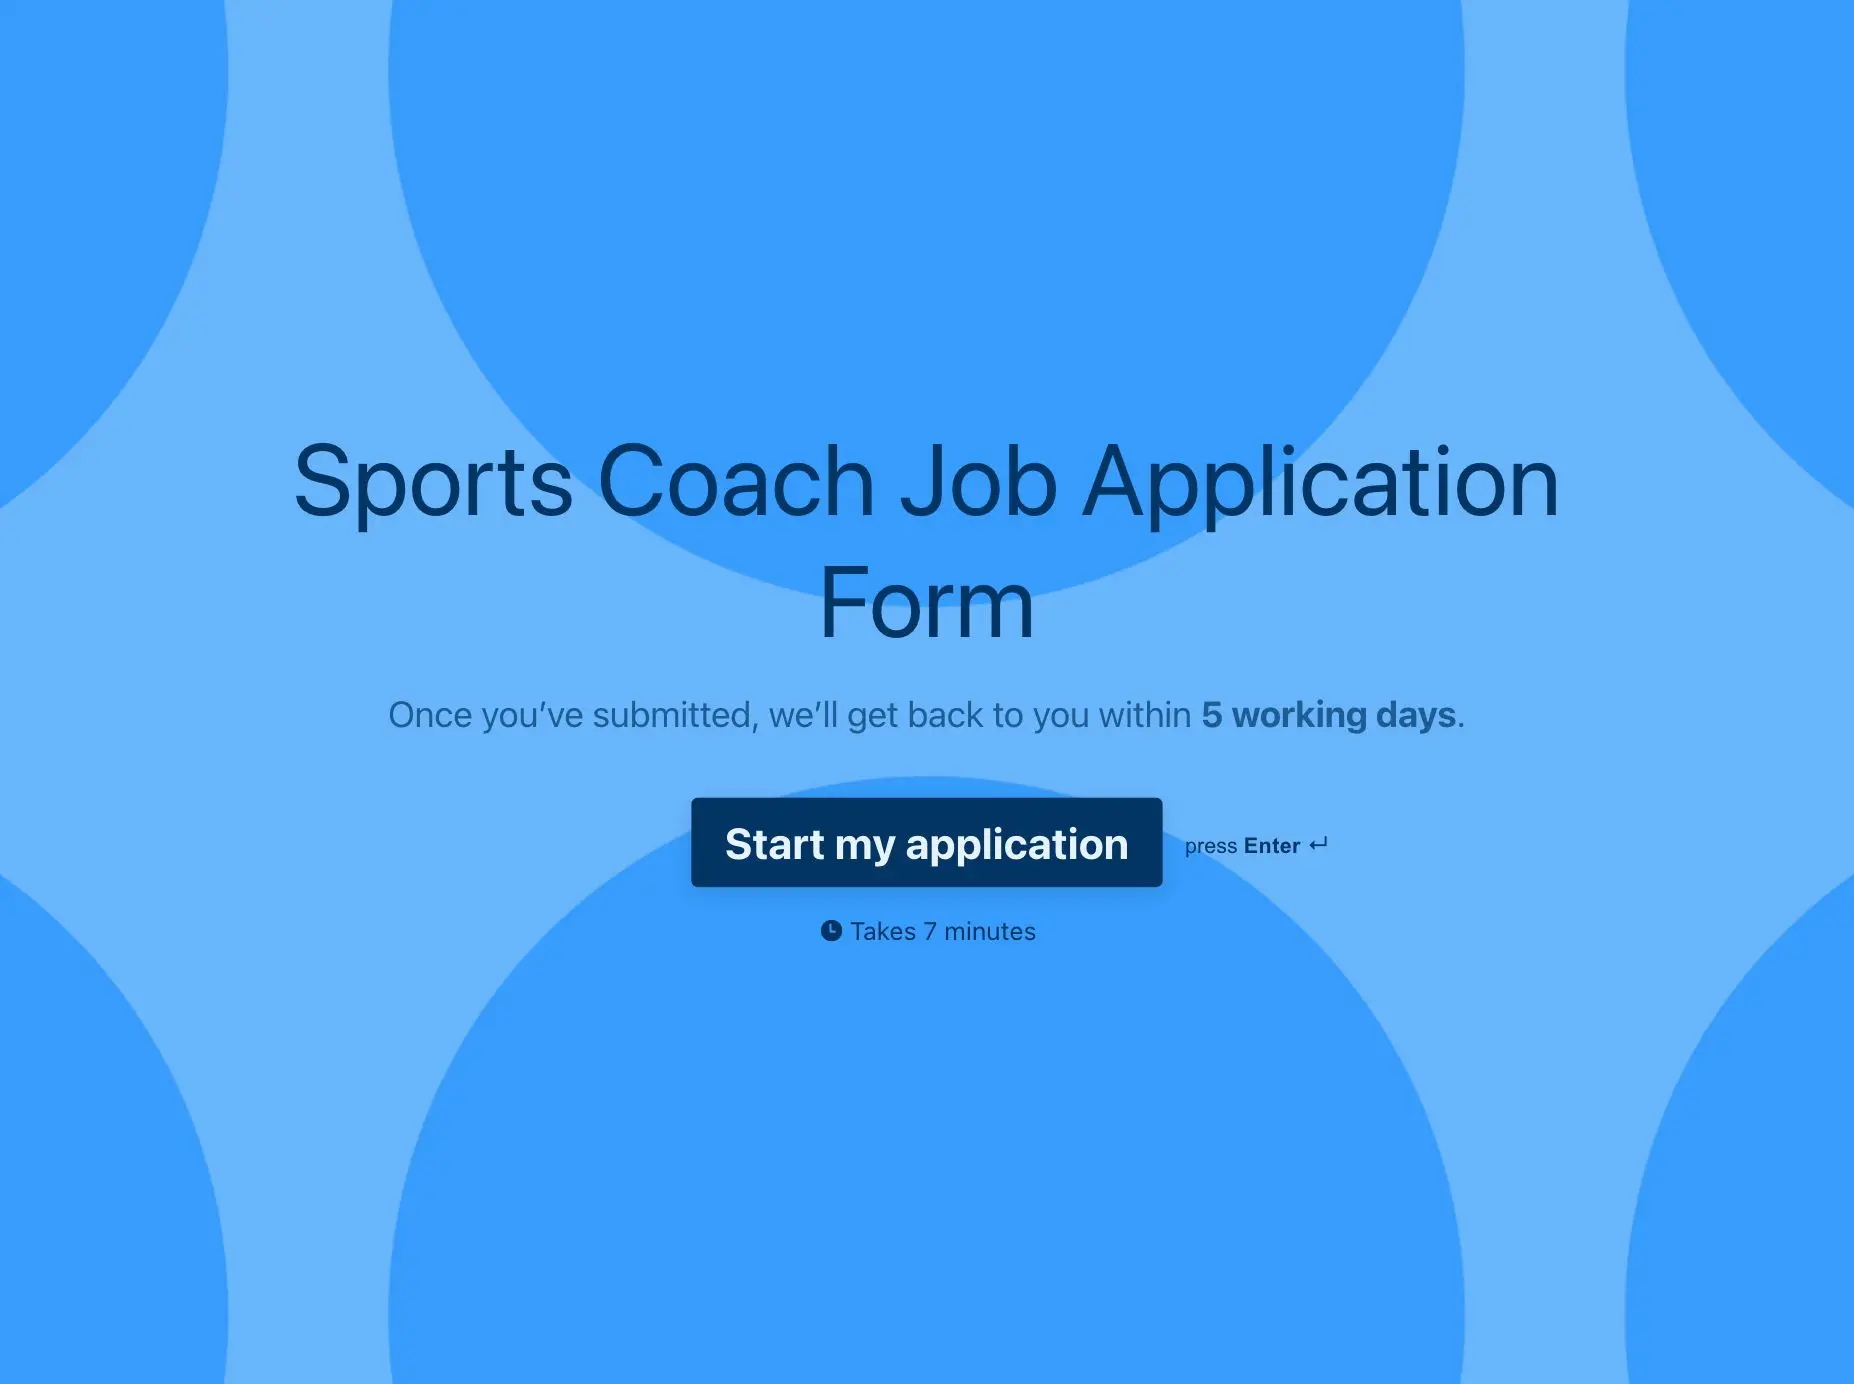 Sports Coach Job Application Form Template Hero